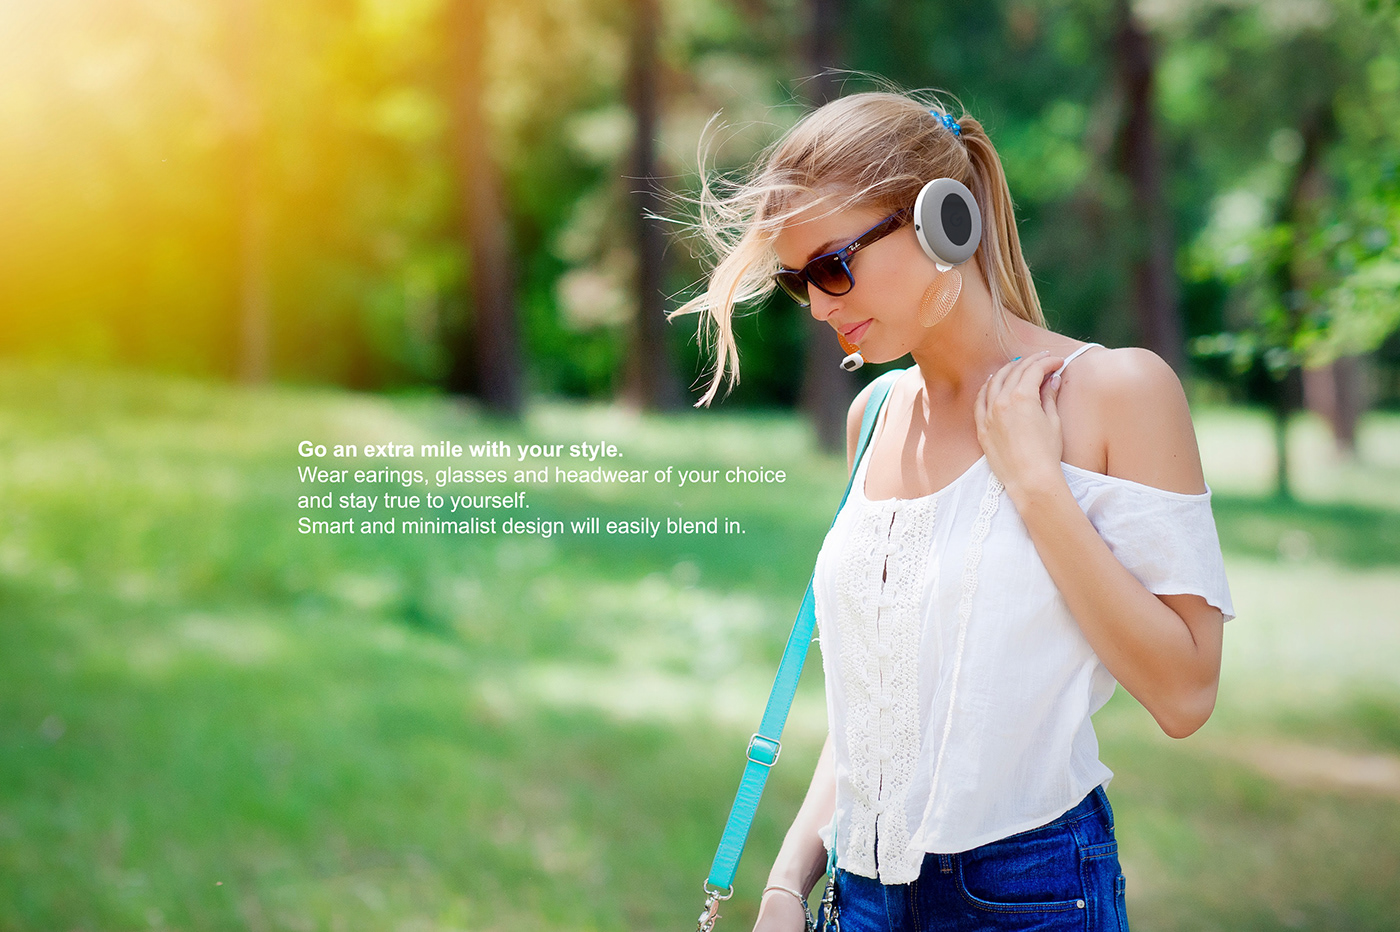 darko nikolic Glasom headphones headset Innovative minimalist Smart headset tech Wearable